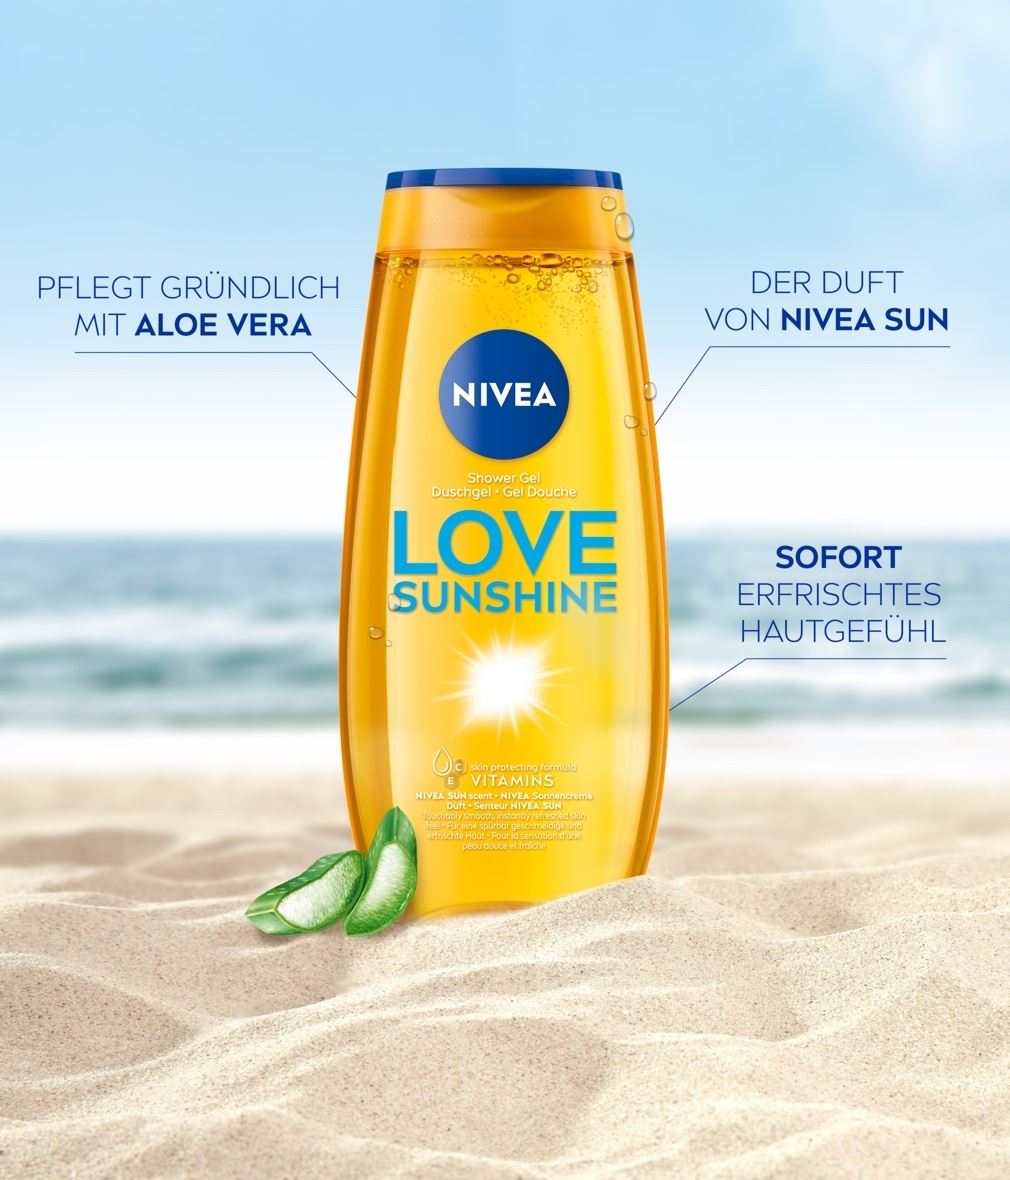 NIVEA Duschgel LOVE Sunshine Produktabbildung mit Benefits